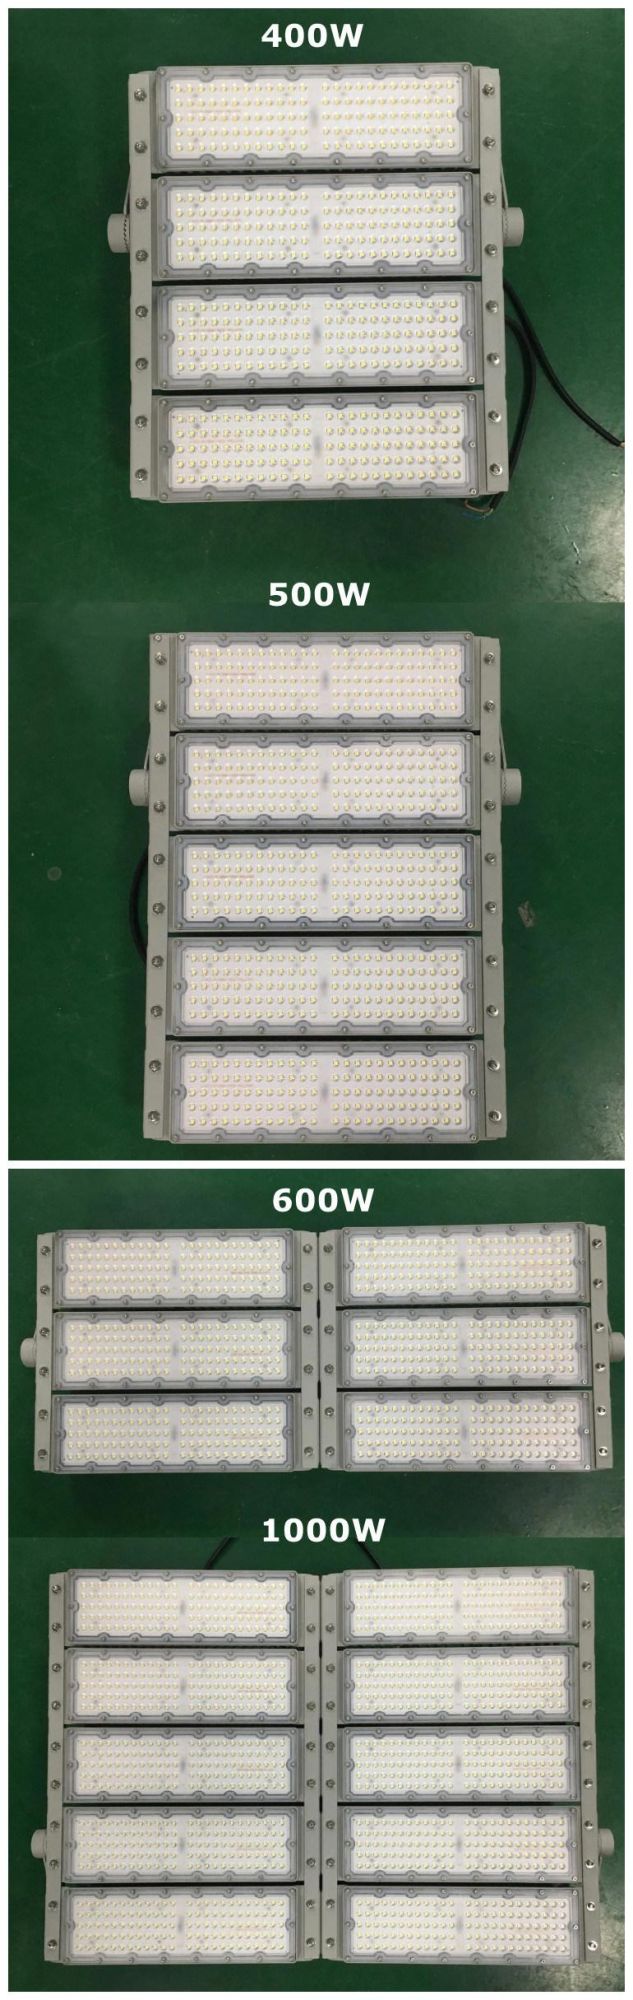 Fast Heat Dissipation Waterproof IP66 200W Wall Lights for Garden with 5 Years Warranty